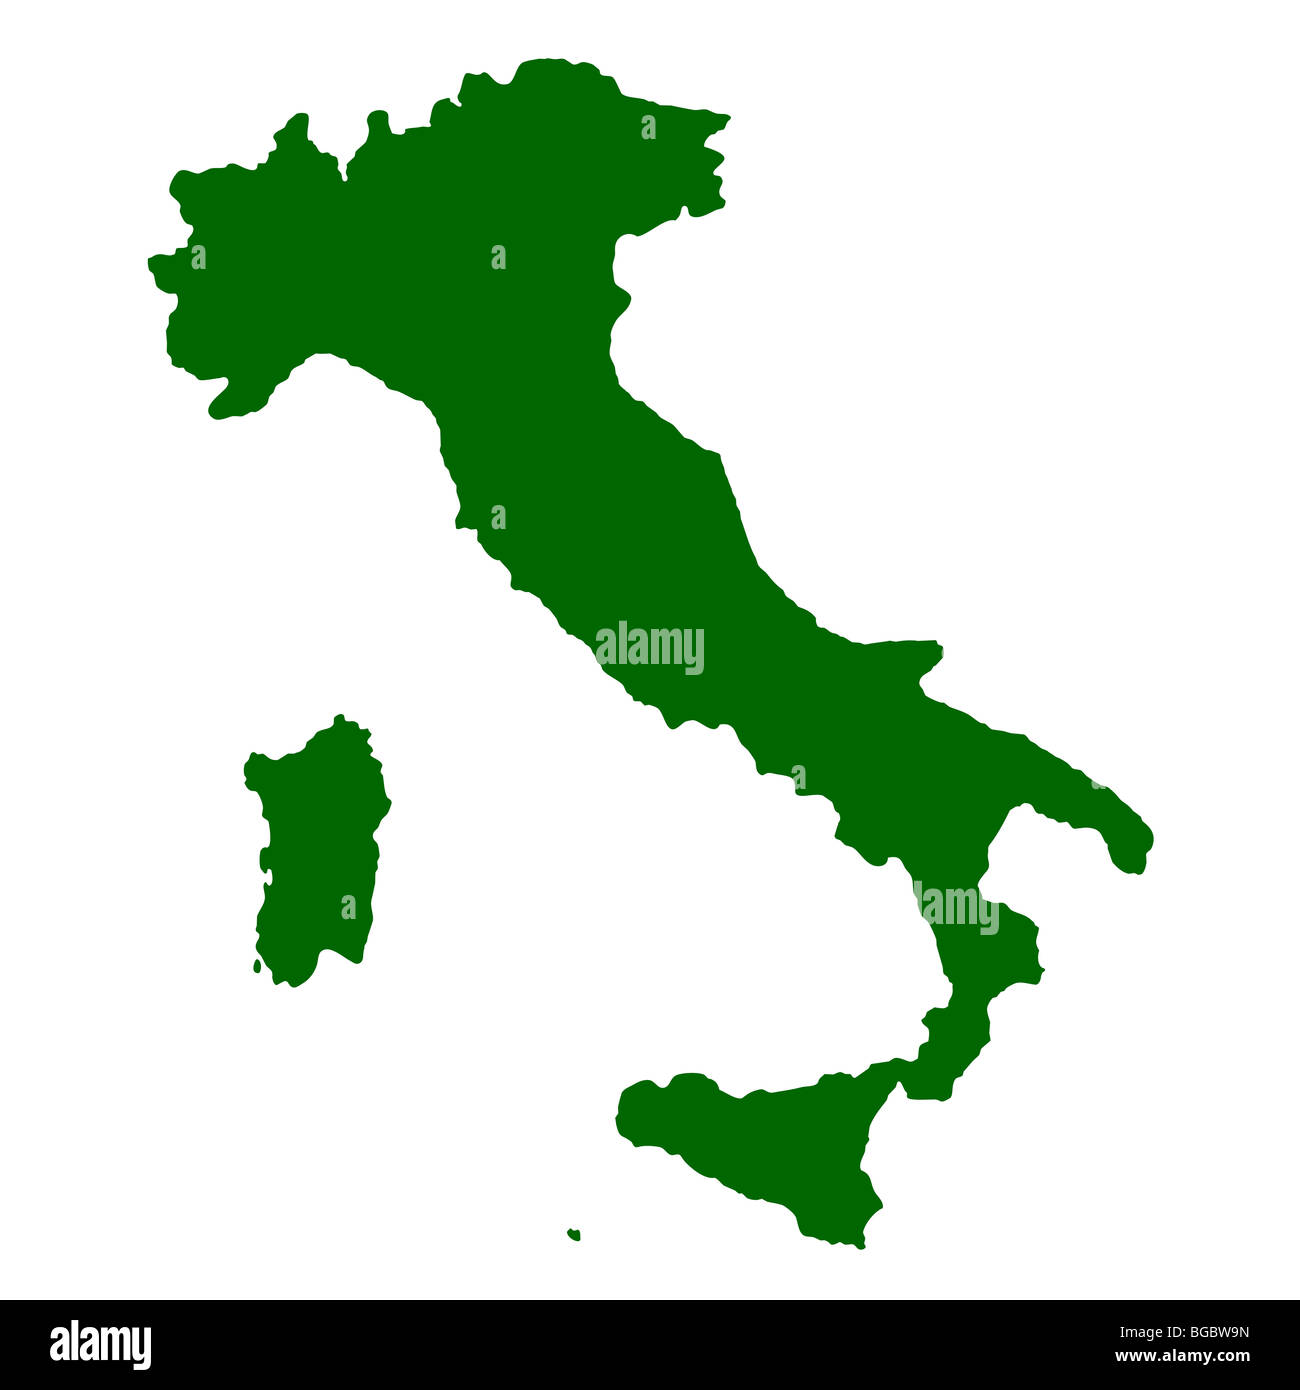 Map of Italy isolated on white background. Stock Photo